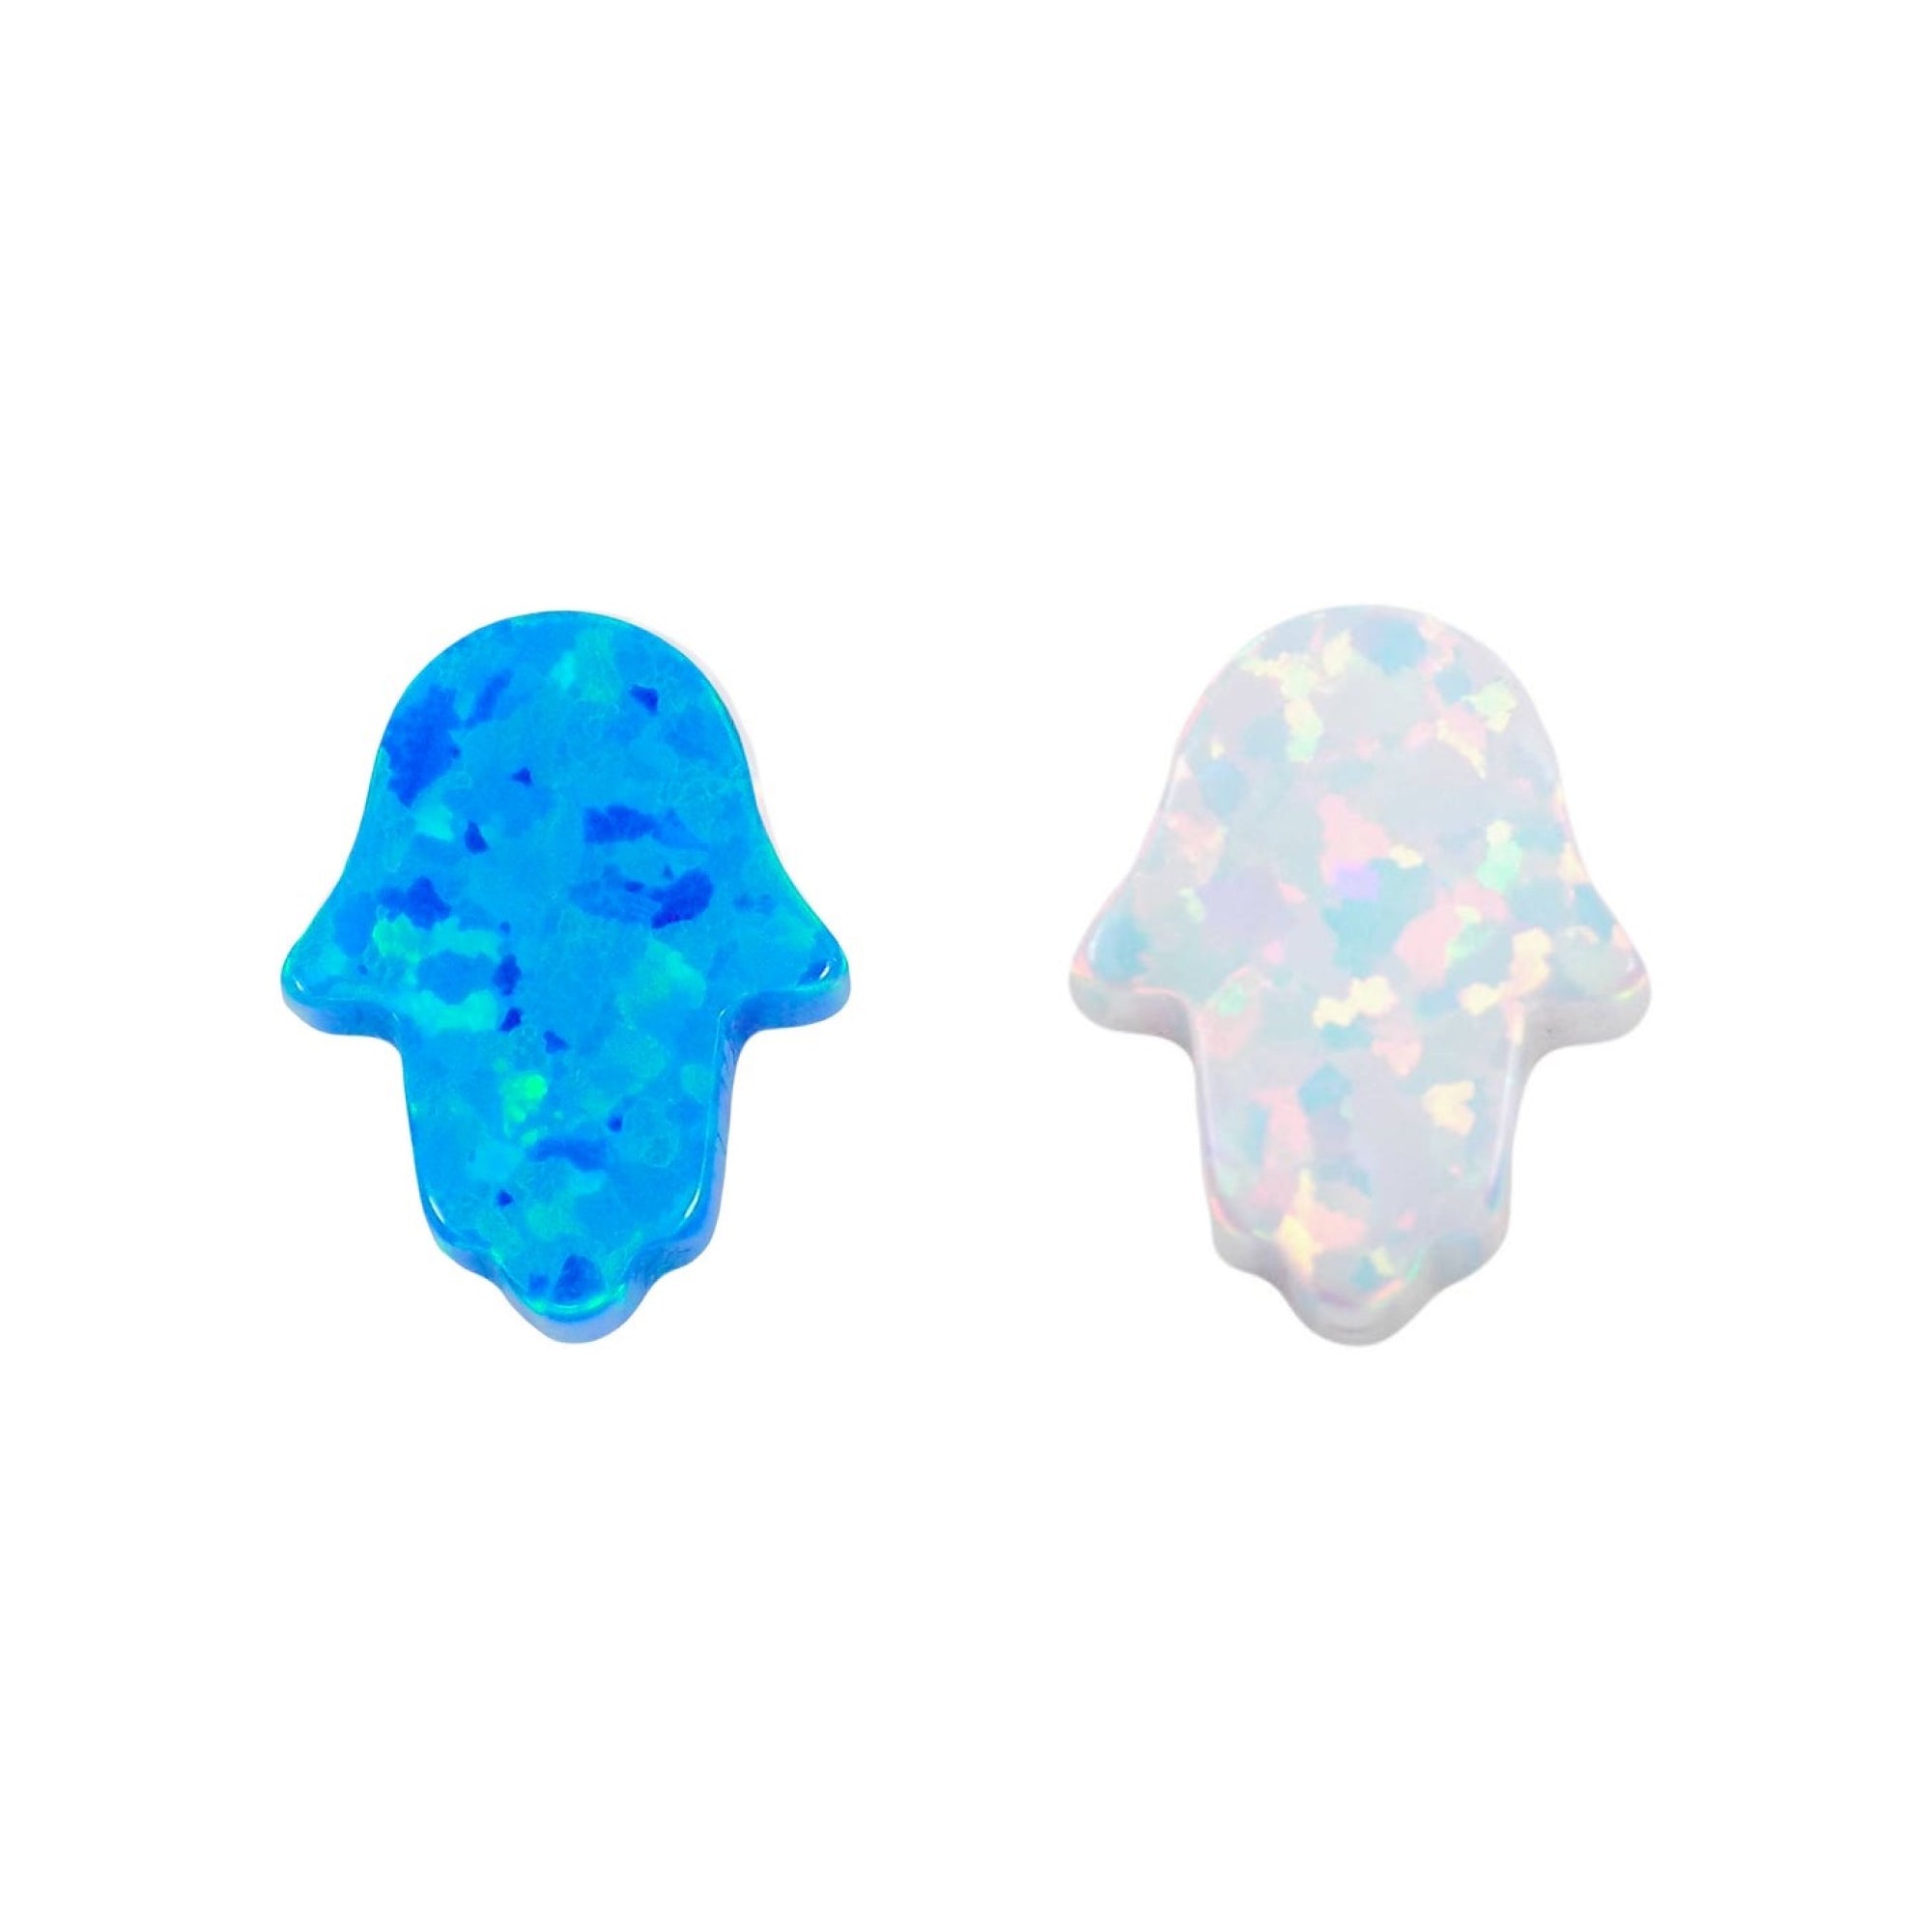 Opal Hamsa Hand Charm Pendant 8x10 mm of Synthetic Opal - Hand of Fatima Opal Charm